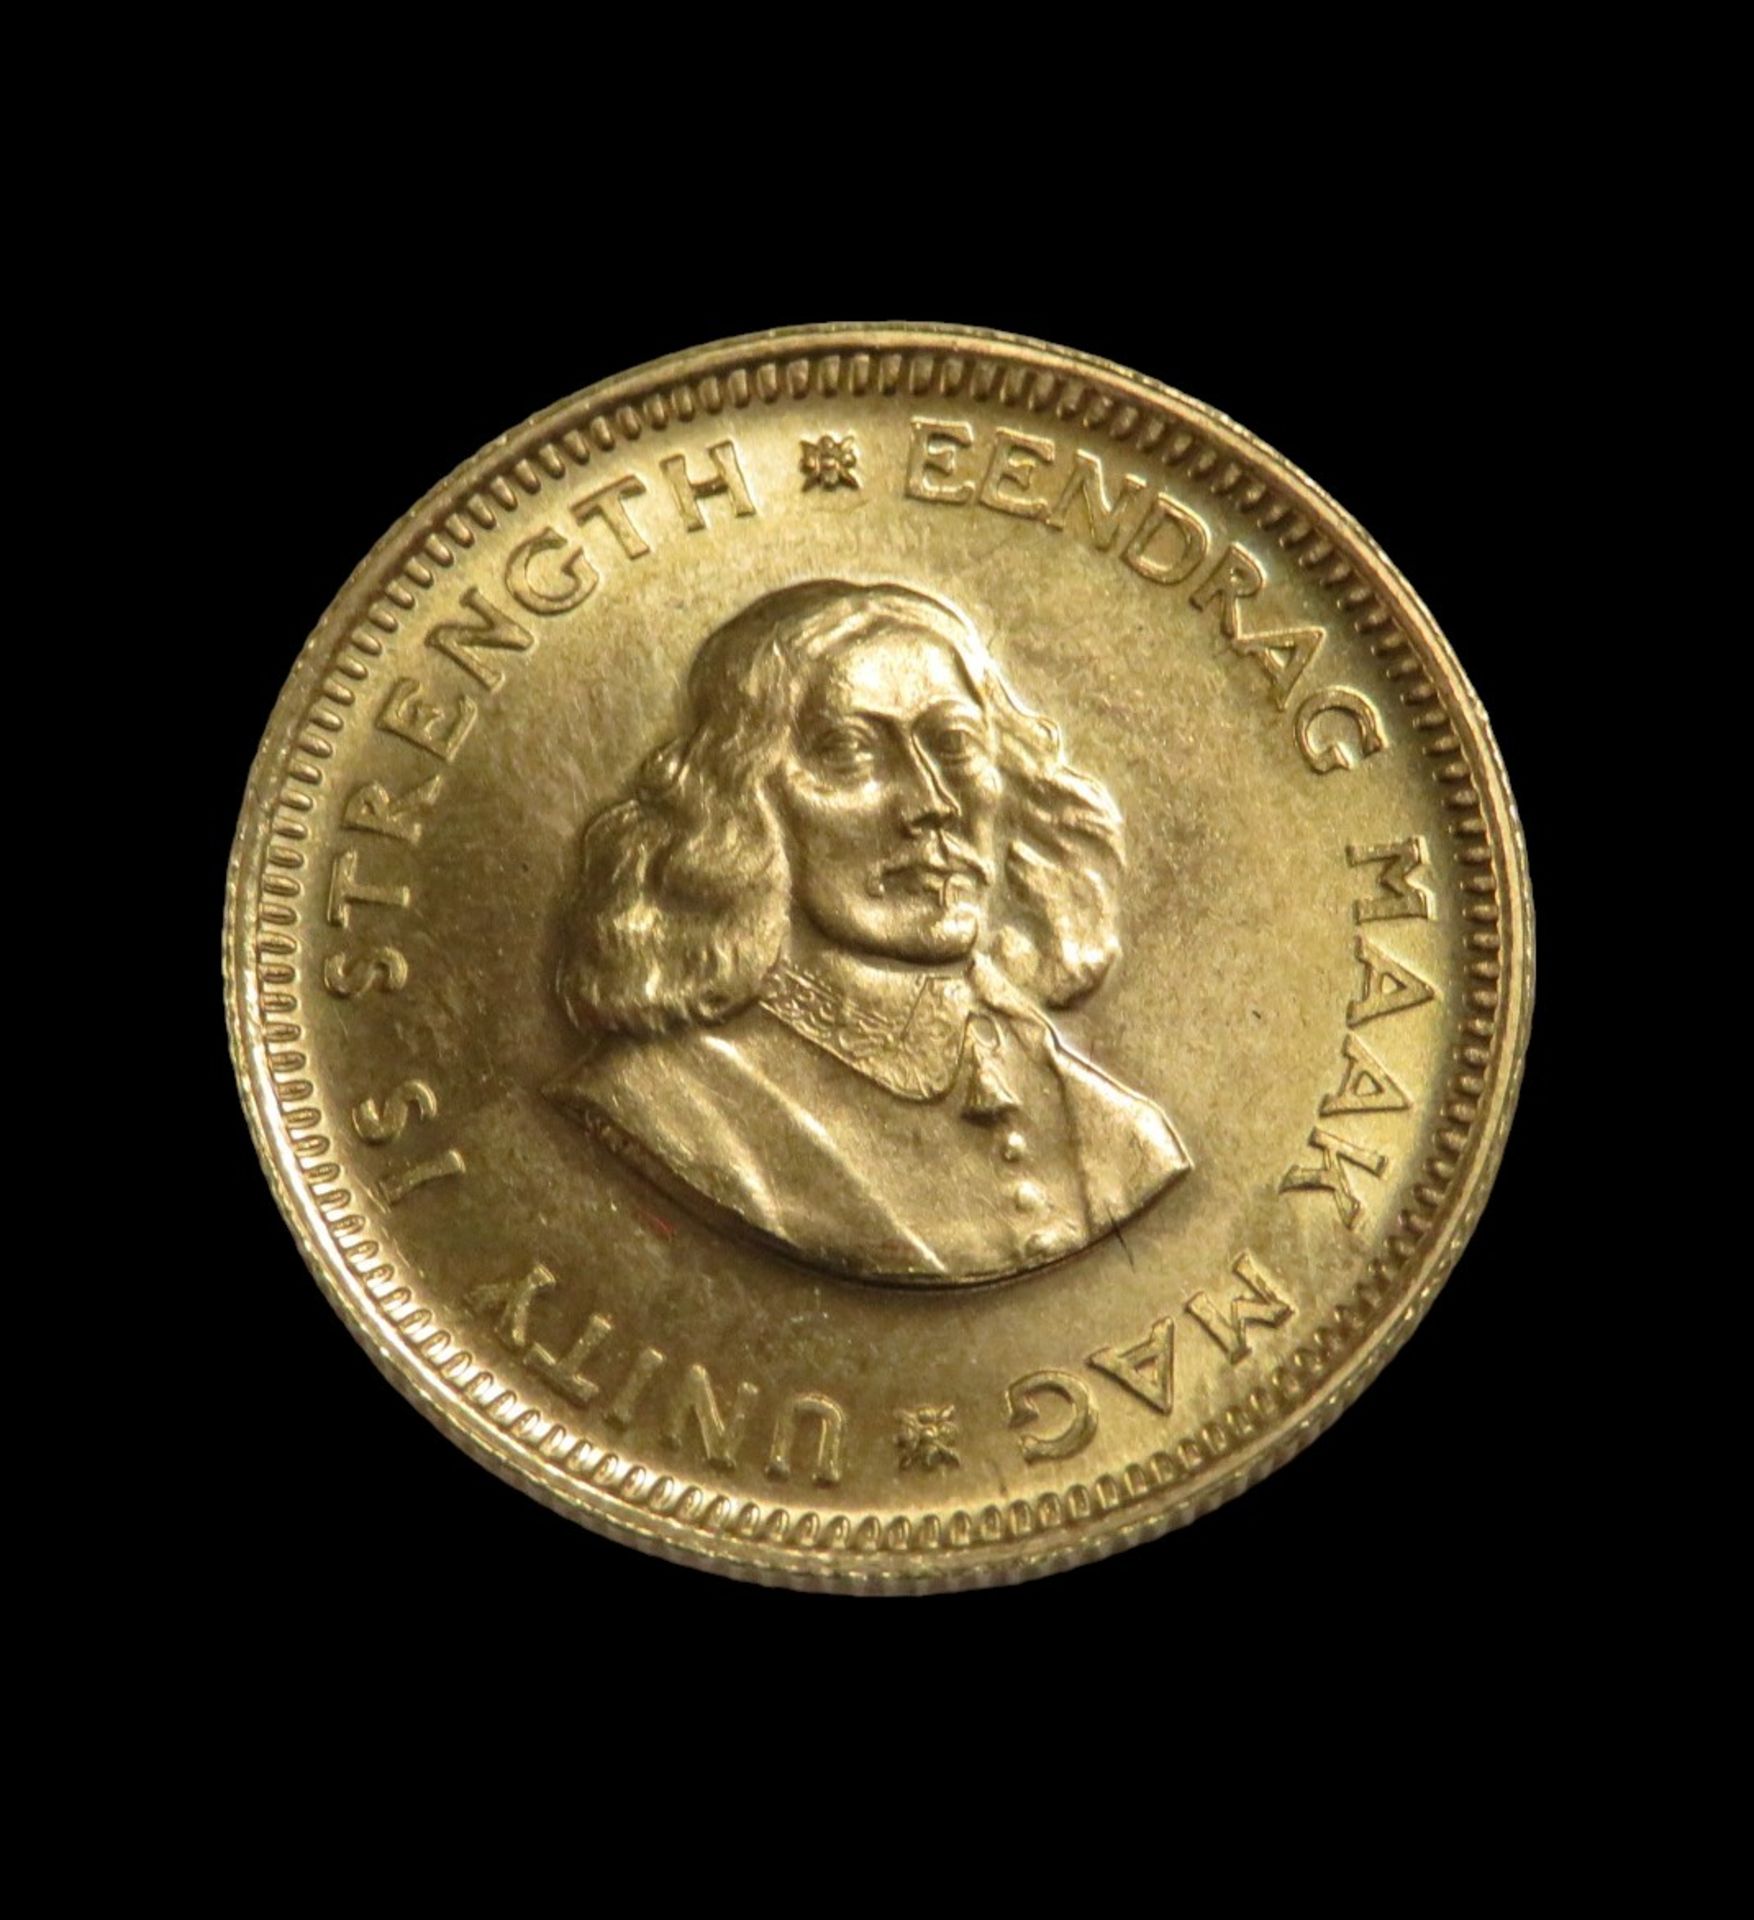 Goldmünze, 1 Rand, Südafrika, 1968, 916,6/000, 4 g, d 1,9 cm. - Image 2 of 2